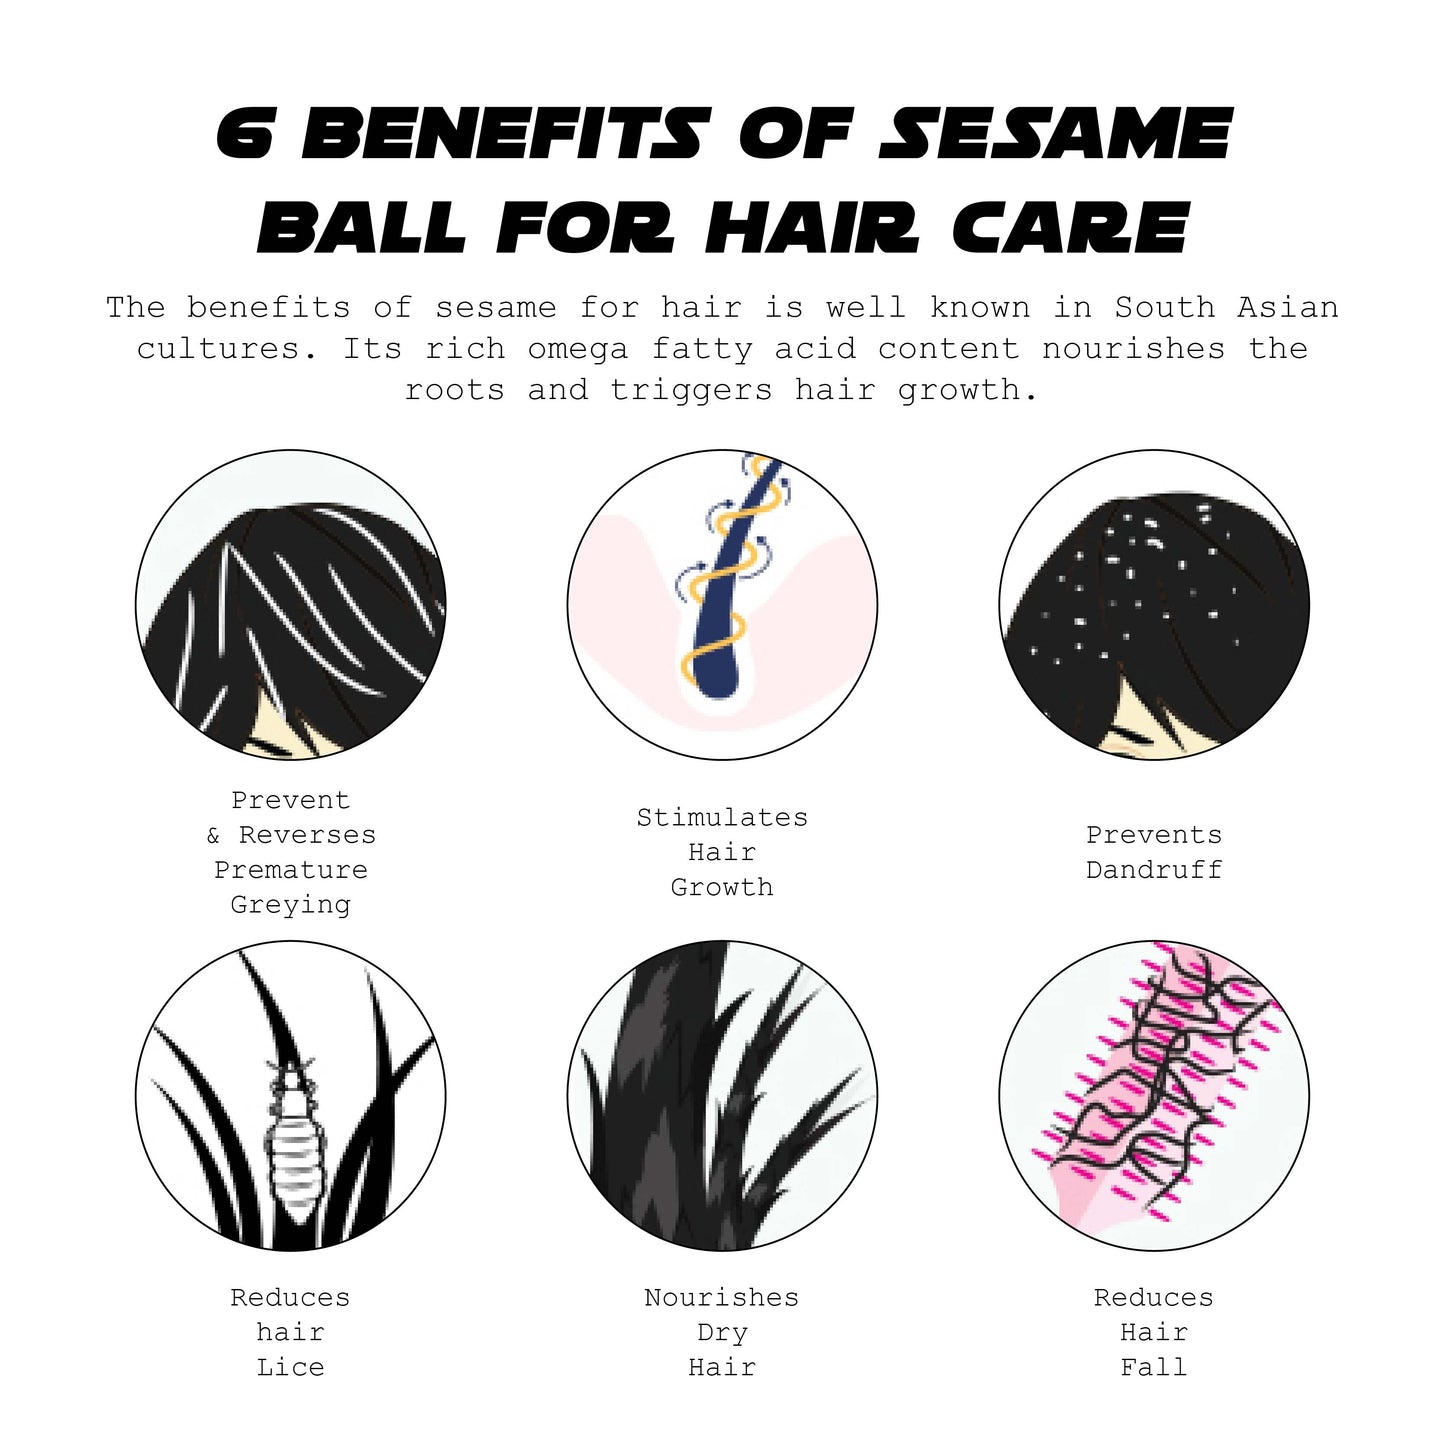 ATTDX Hair Follicle Renewal Black Sesame Ball